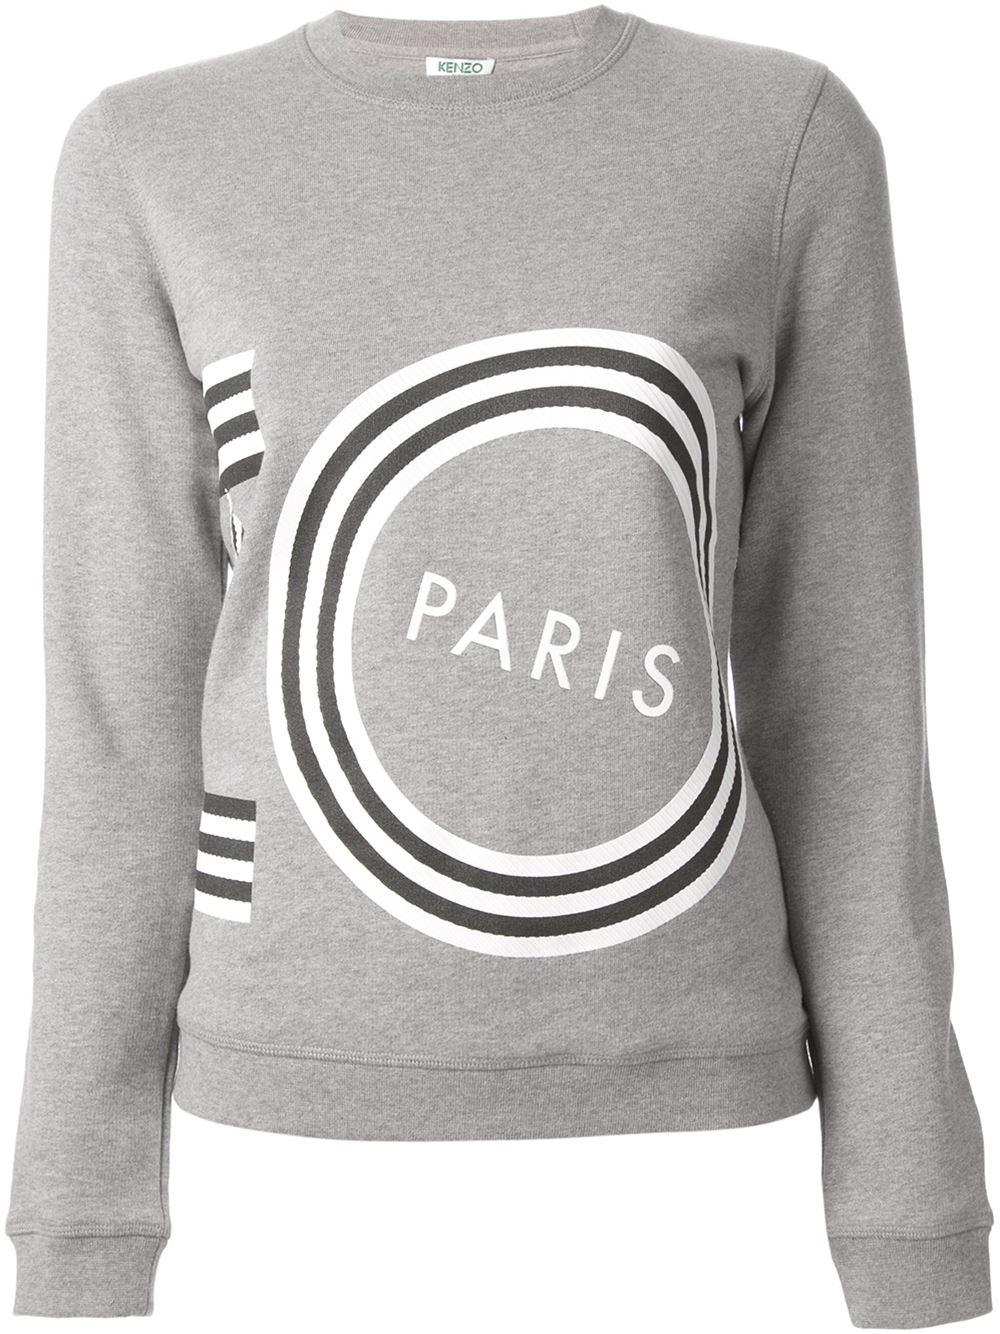 KENZO Paris Print Sweatshirt in Grey (Gray) - Lyst